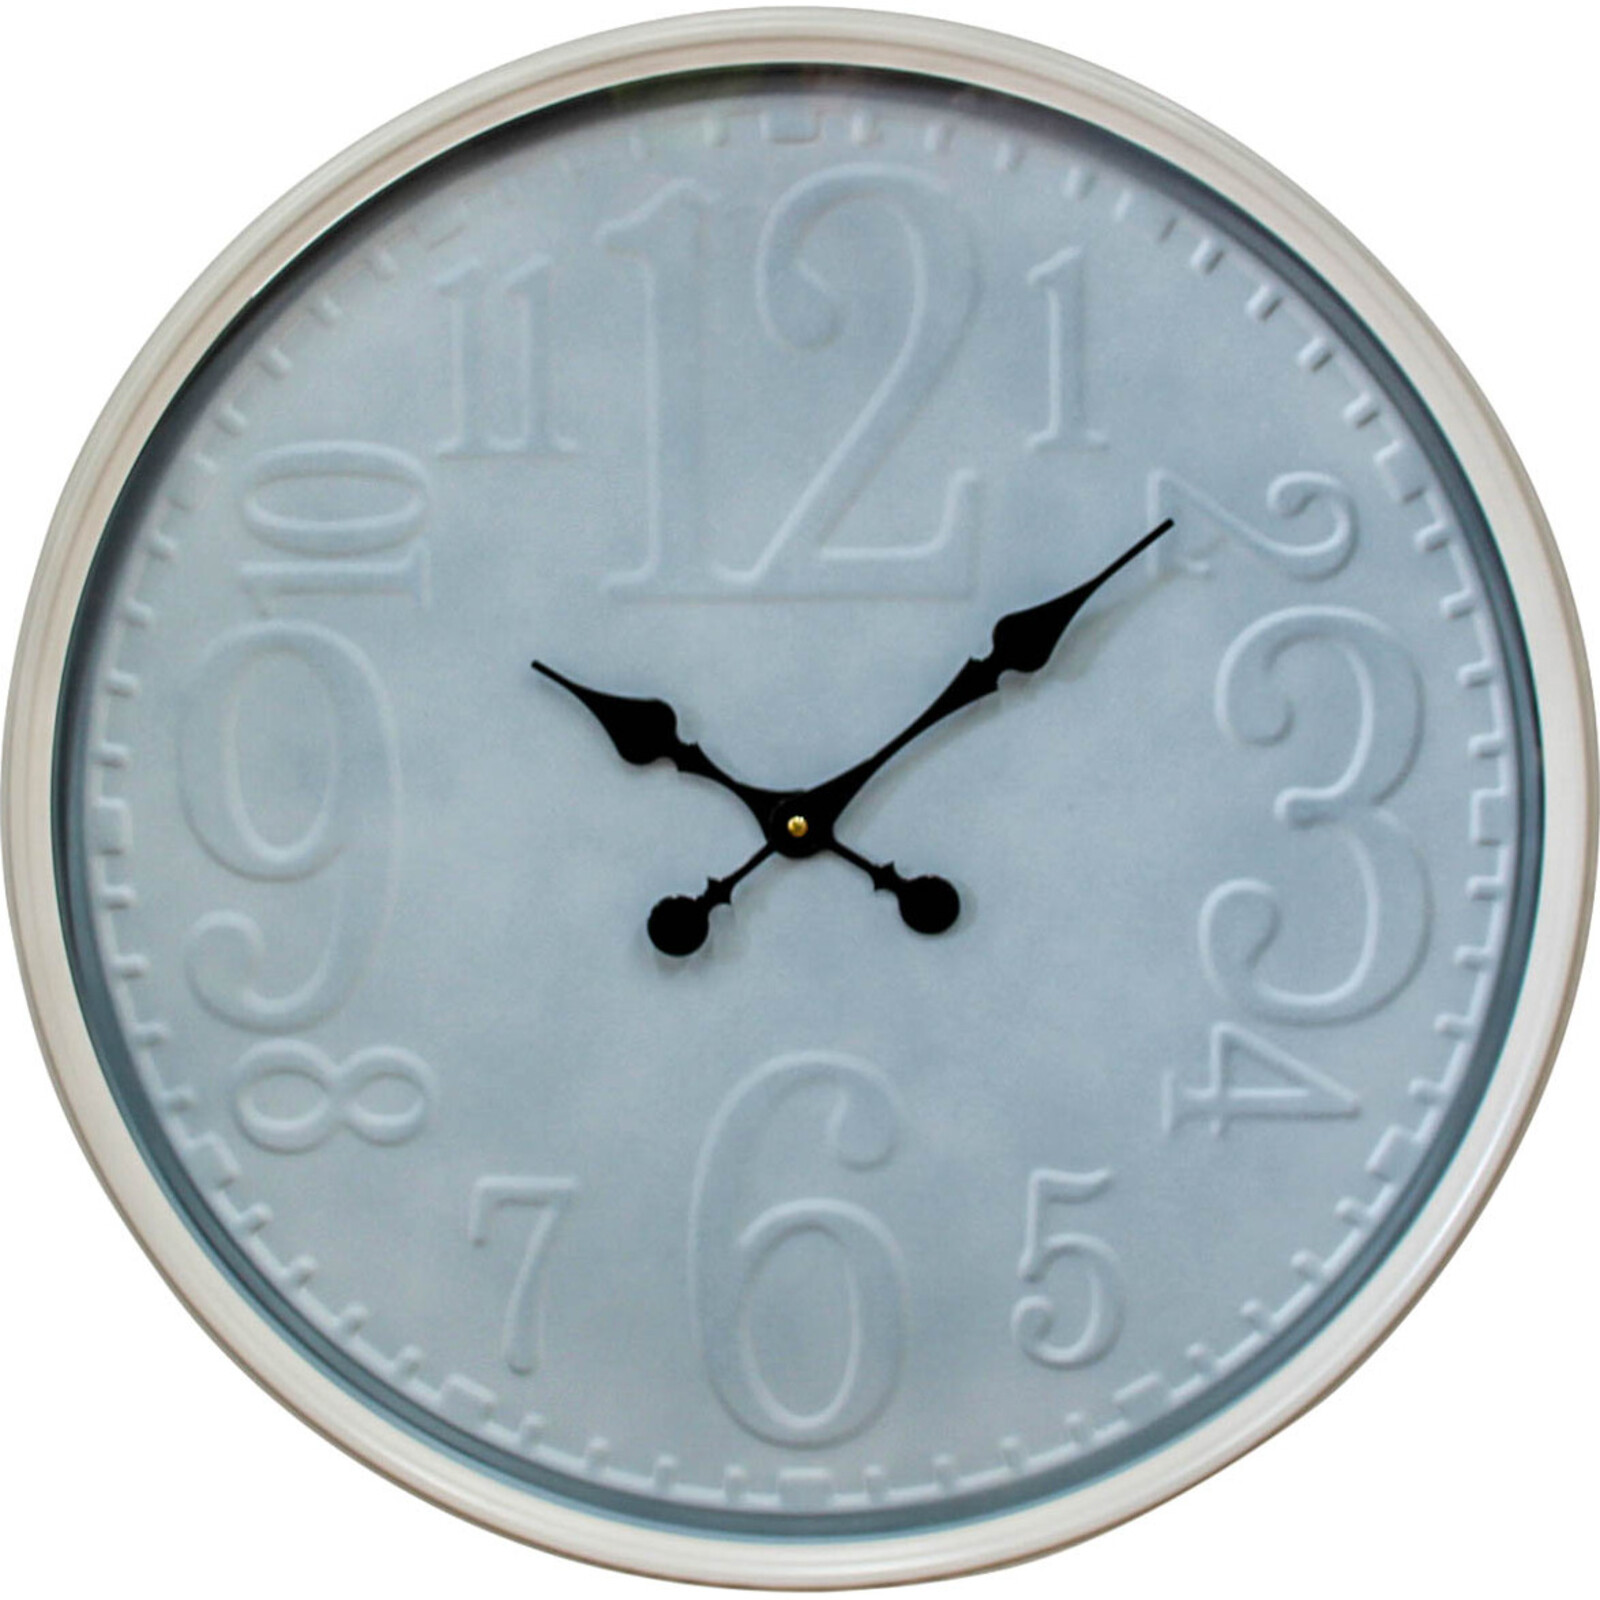  Metal Clock Mixed Numbers White